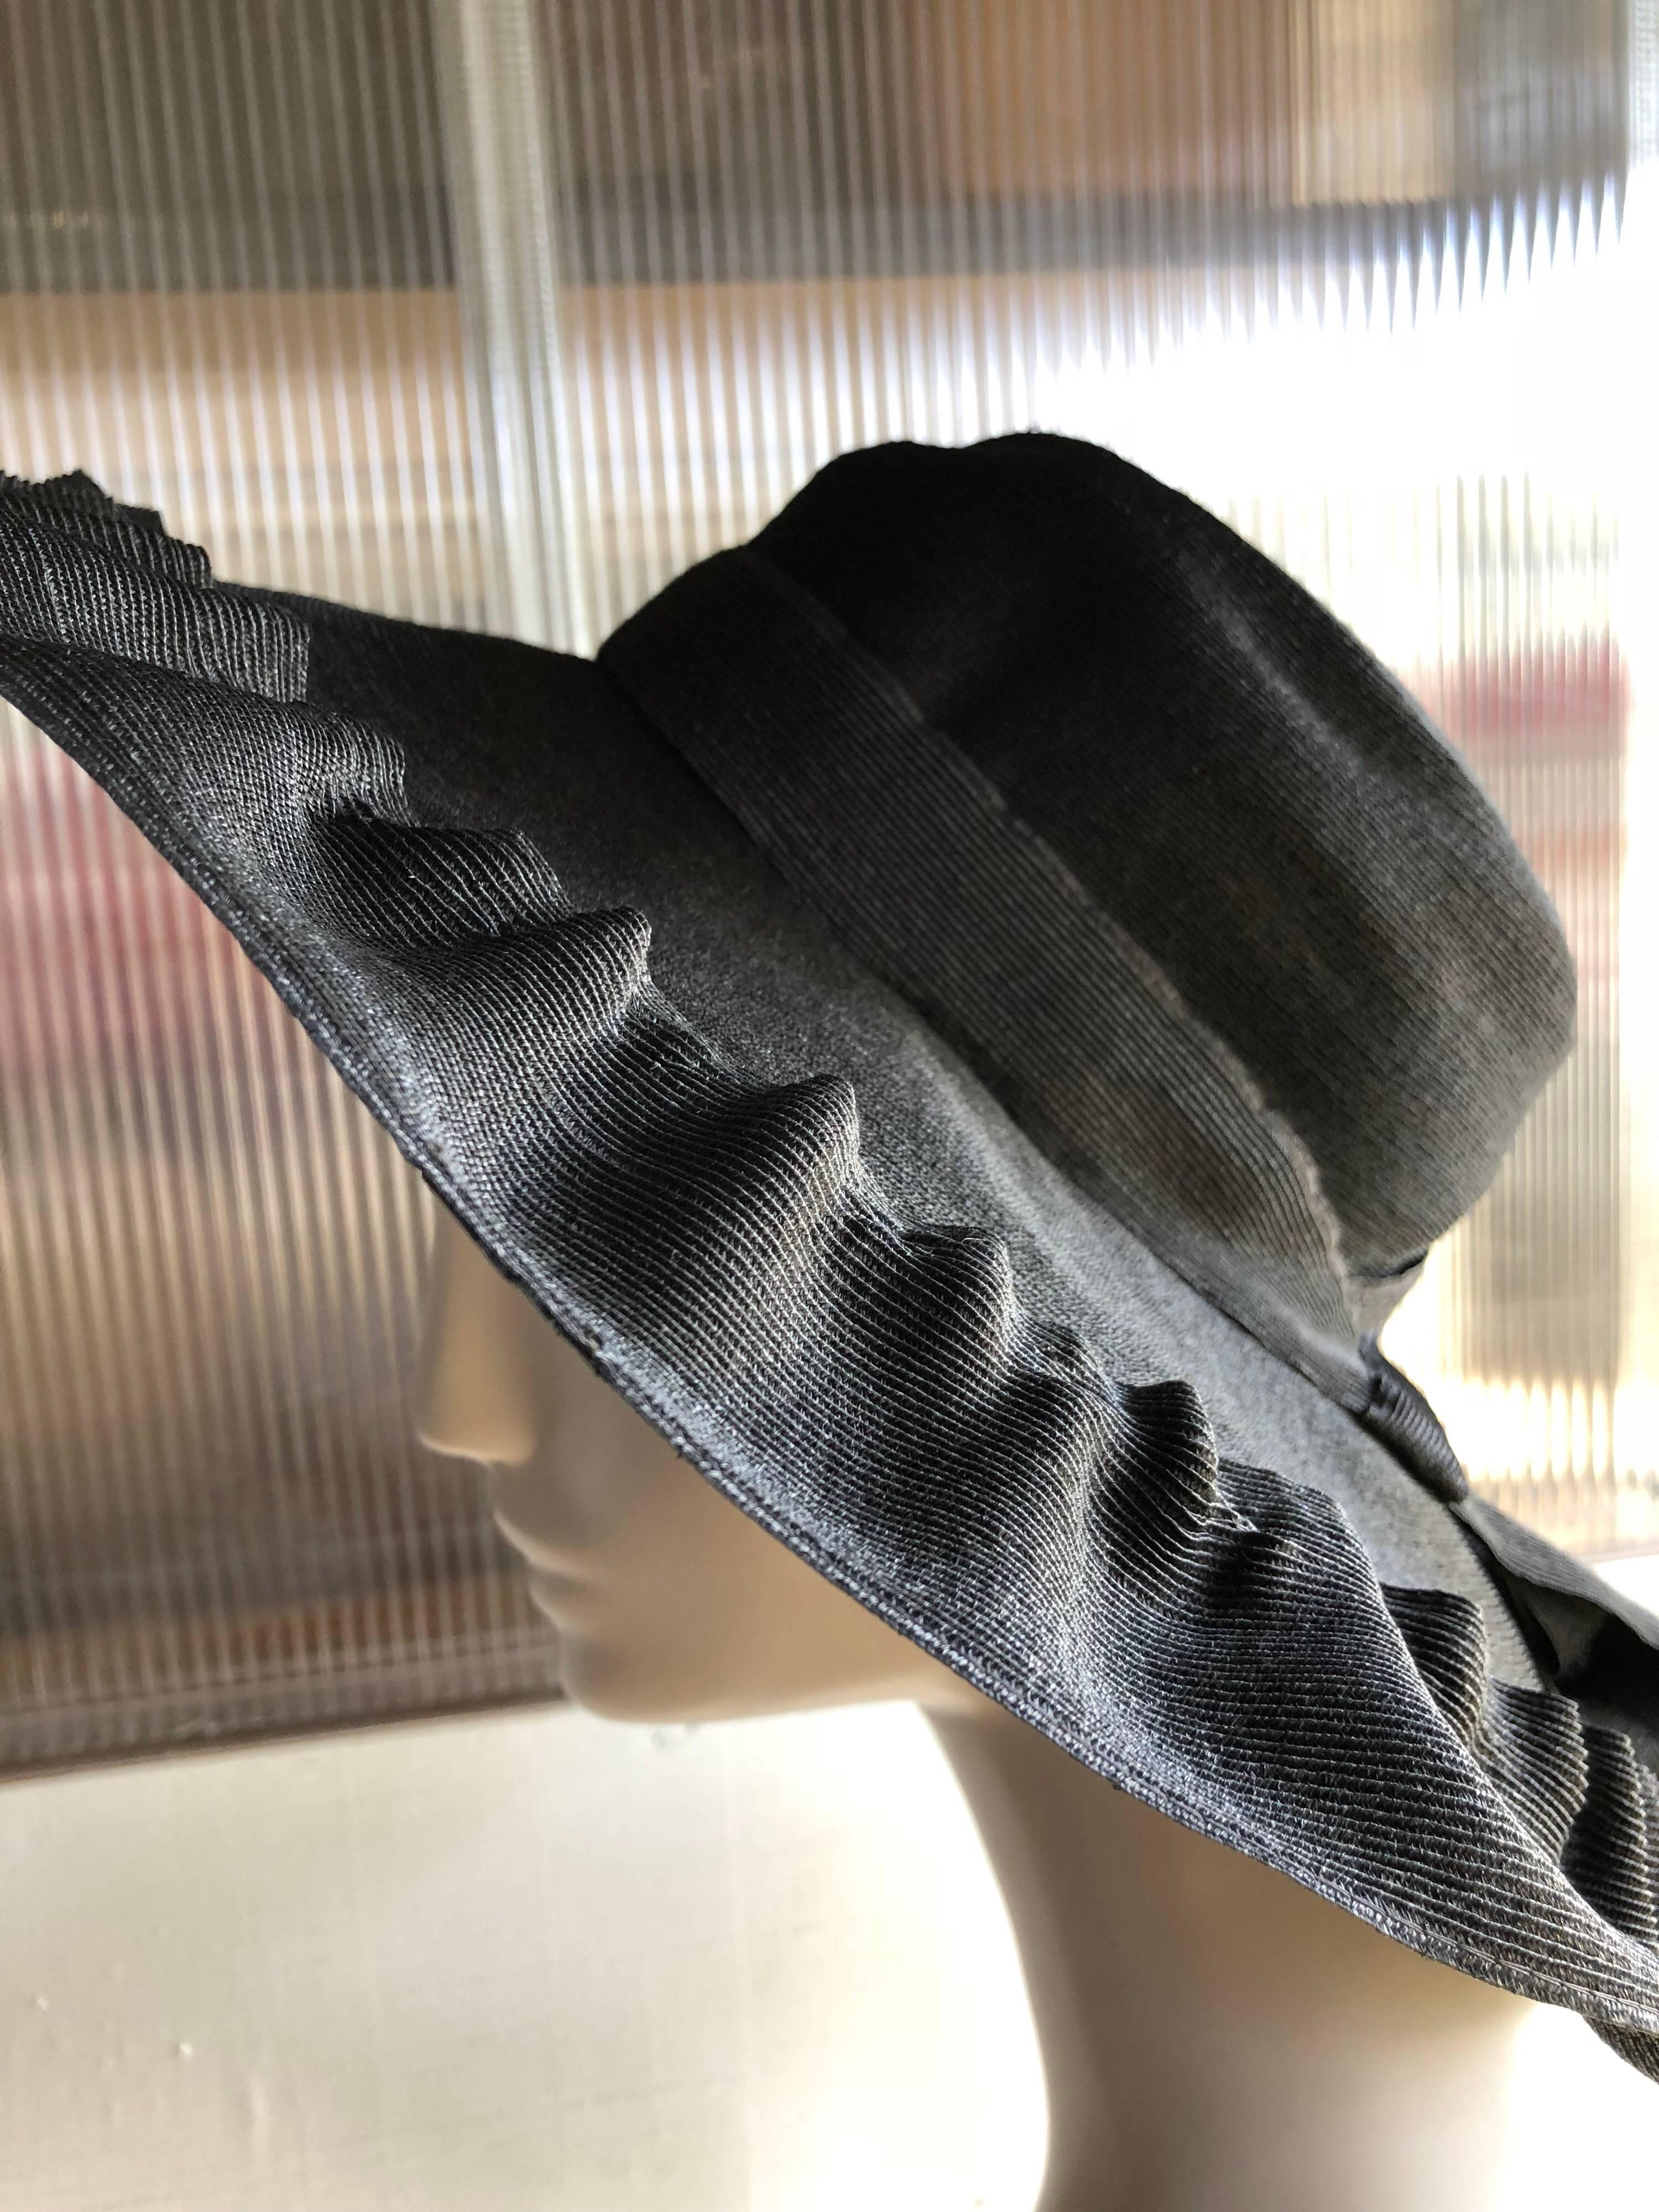 Irina Roublon Large Dramatic Black Straw Hat With Ruffled Straw Brim, 1940s  2